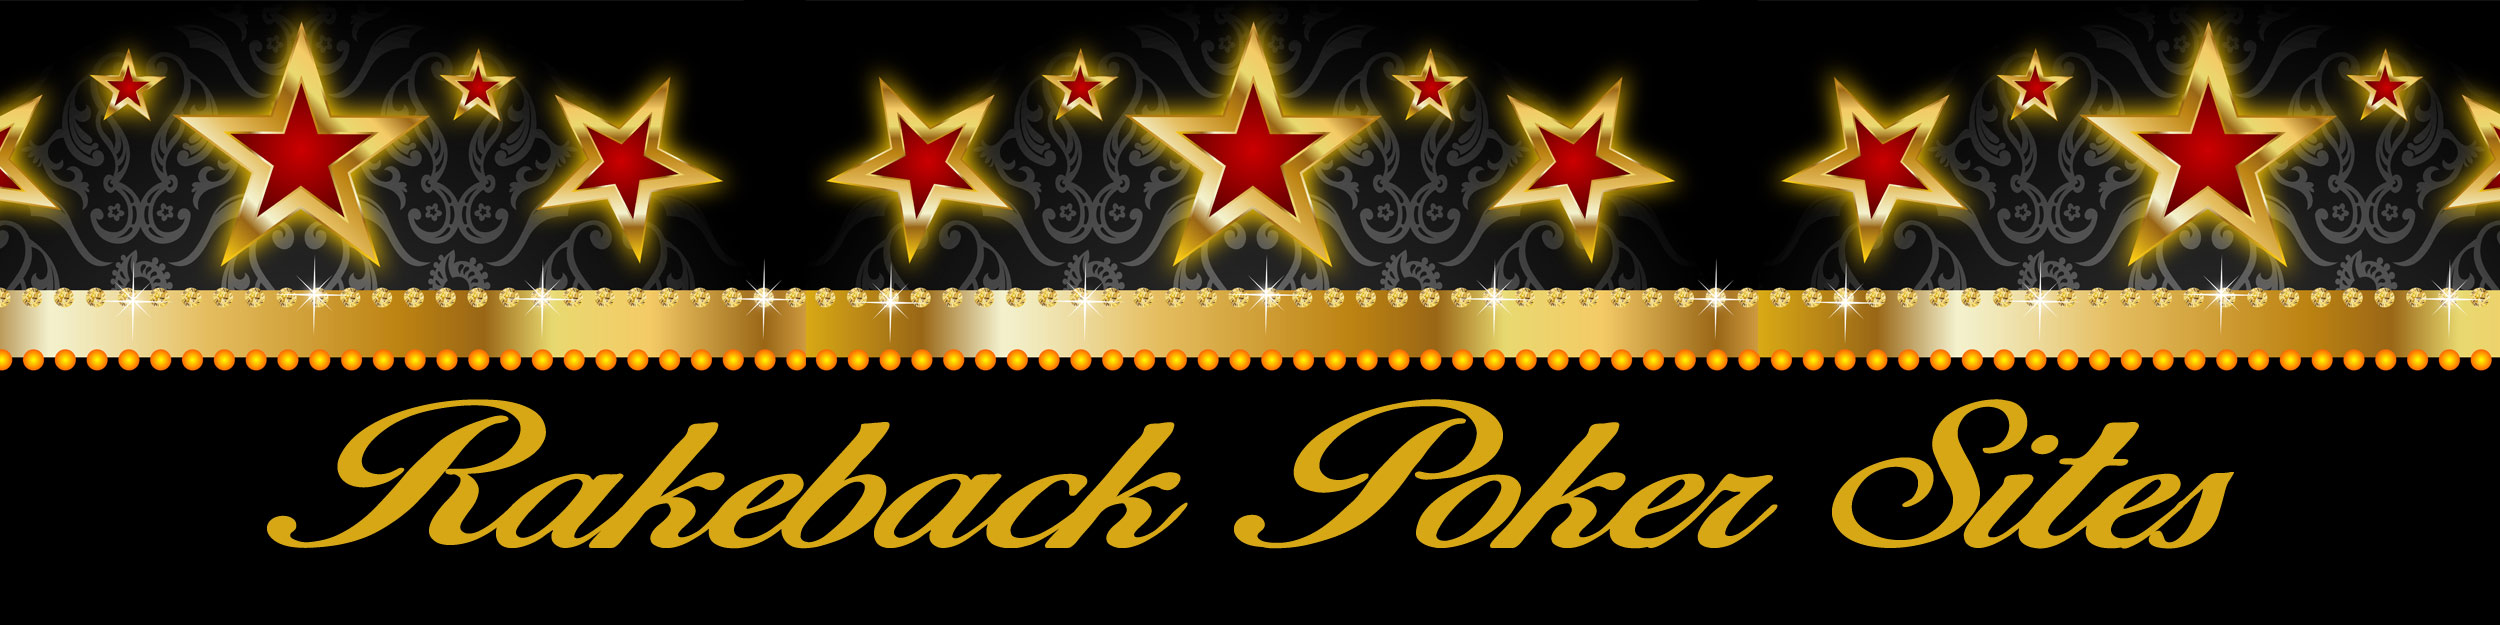 Rakeback Poker Sites